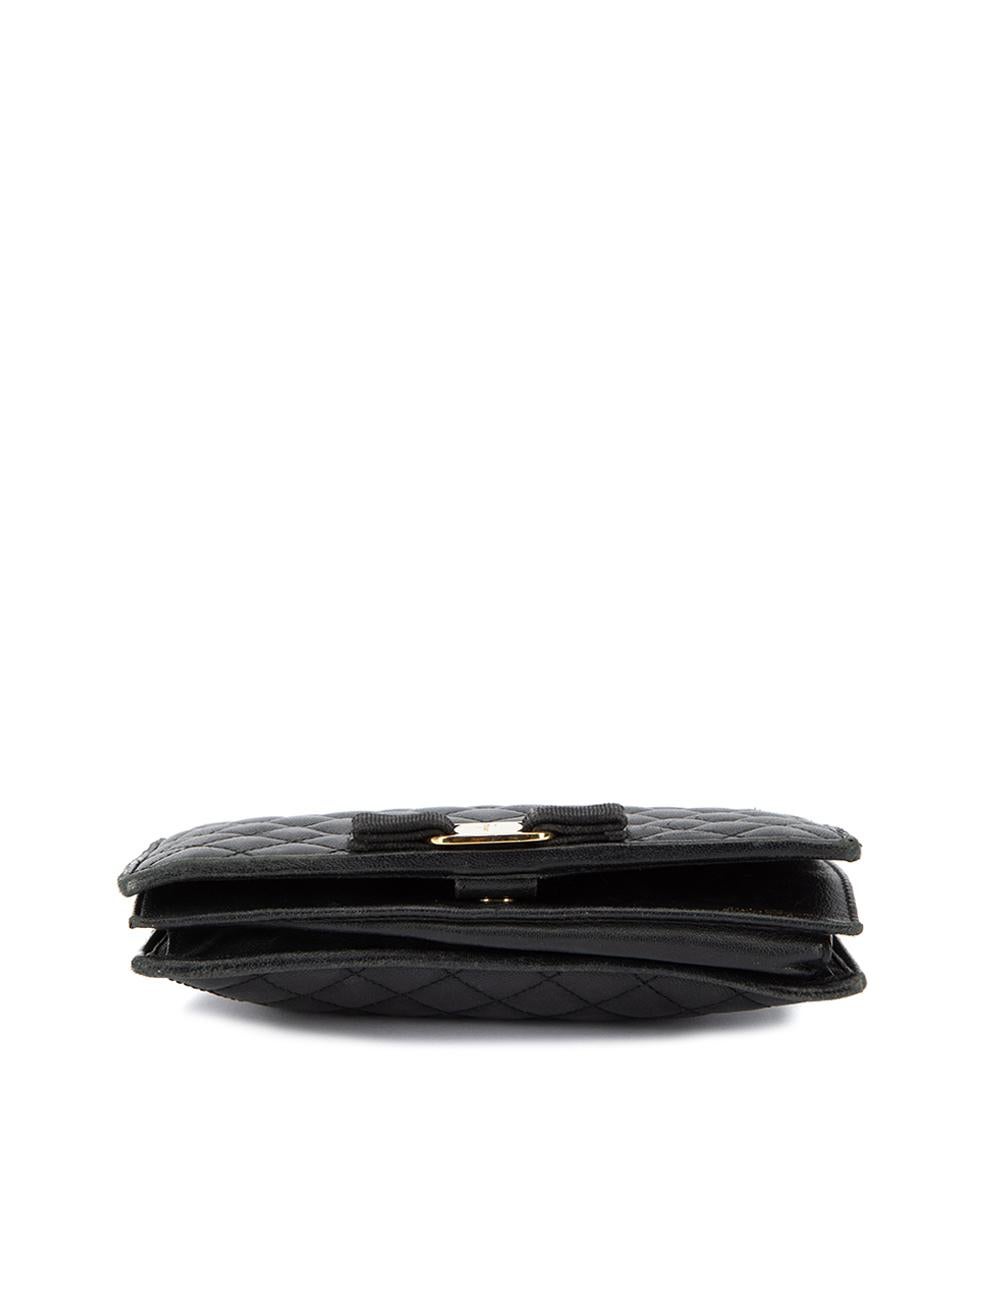 Salvatore Ferragamo Women's Black Leather Quilted Chain Wallet Bag 1